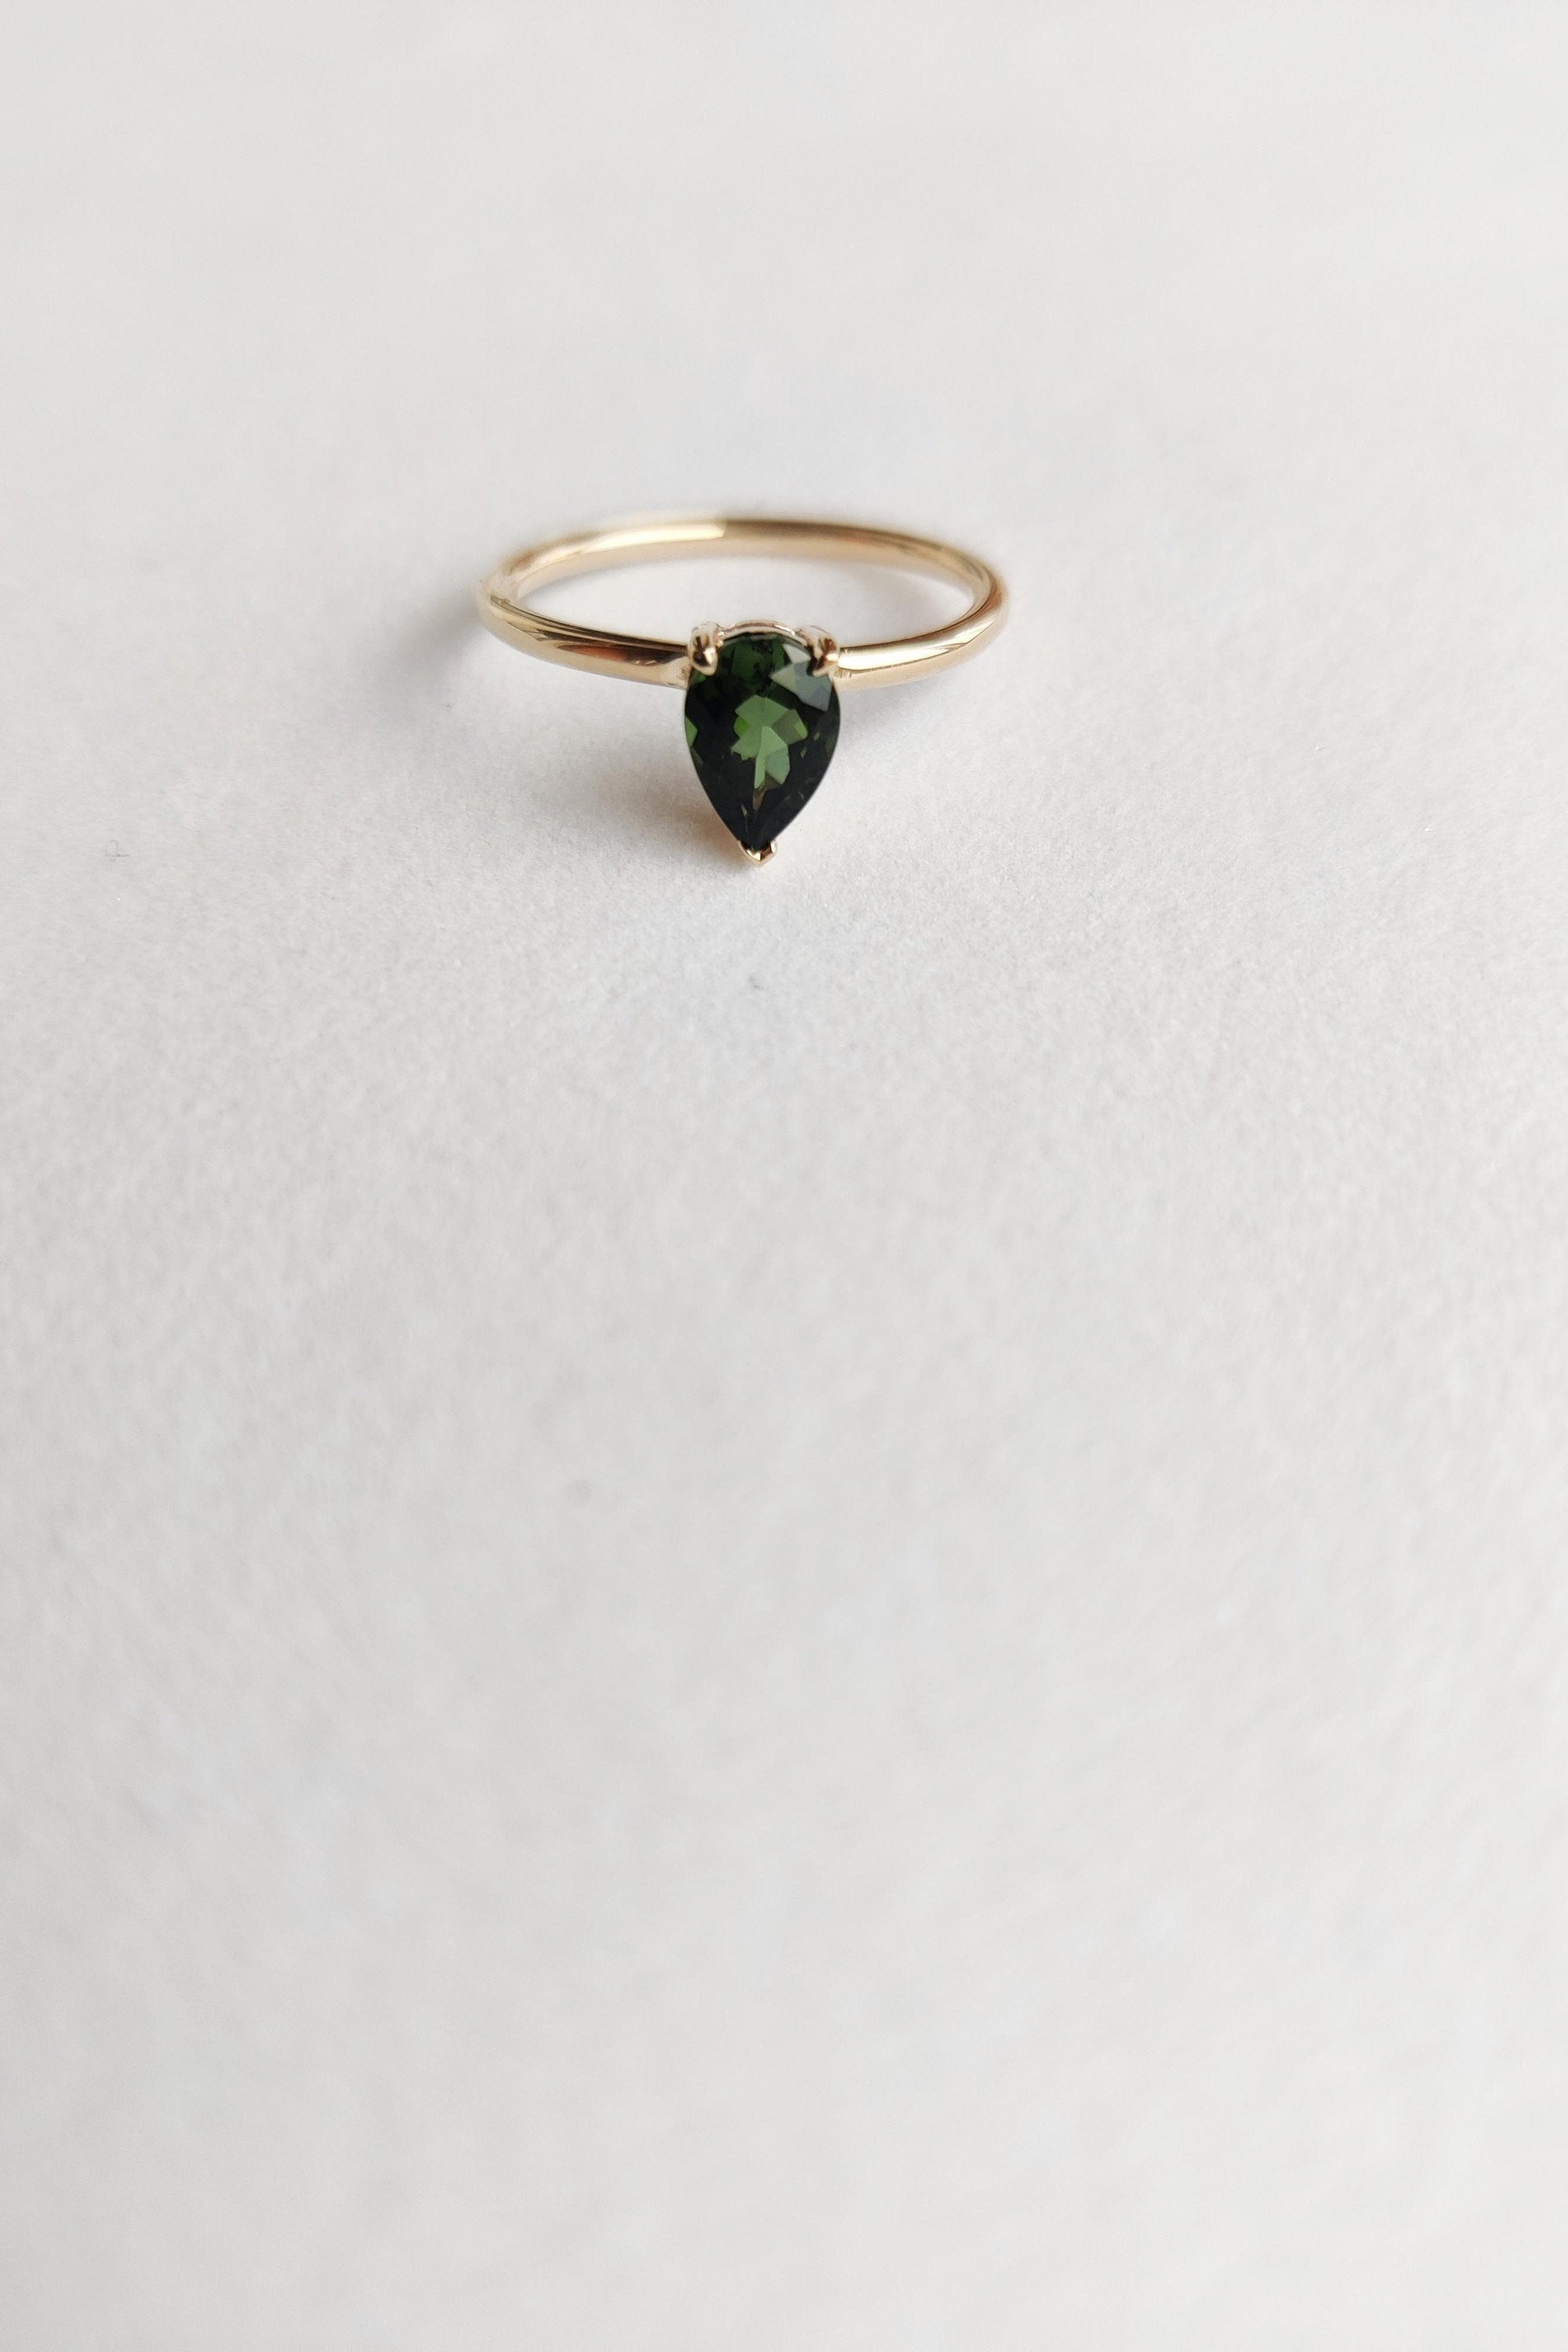 Green Tourmaline Ring-The Diamond Setter